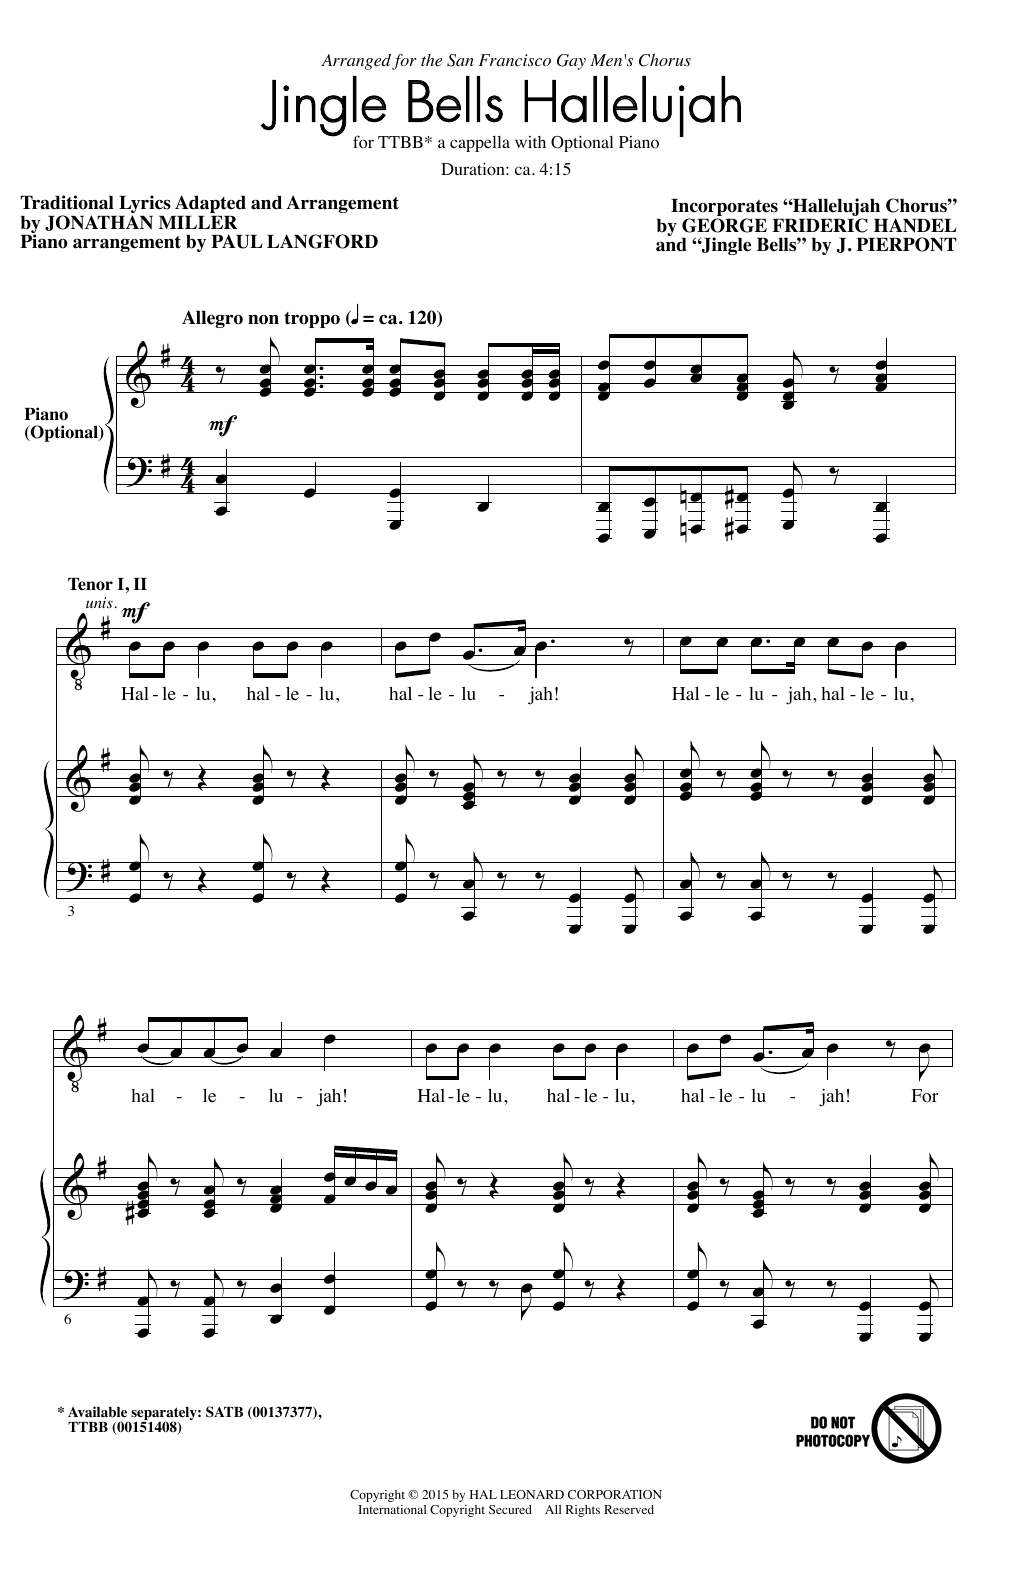 Jonathan Miller Hallelujah Chorus sheet music notes and chords arranged for TTBB Choir